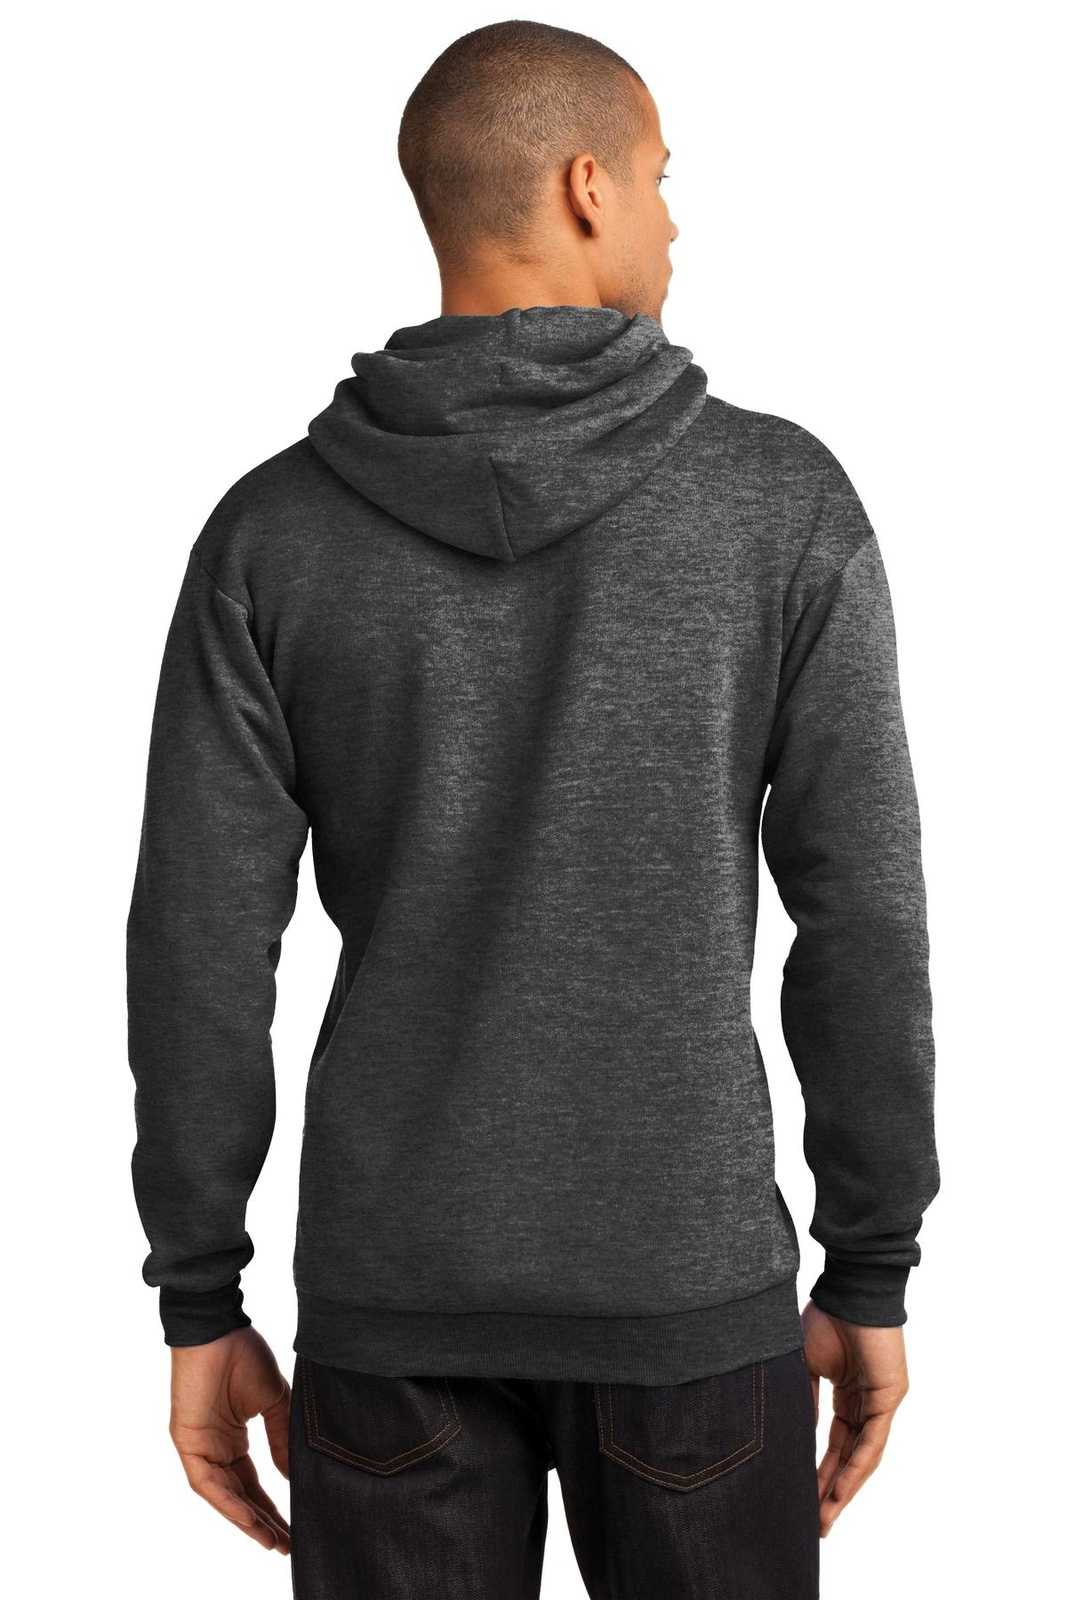 Port & Company PC78H Core Fleece Pullover Hooded Sweatshirt - Dark Heather Gray - HIT a Double - 1